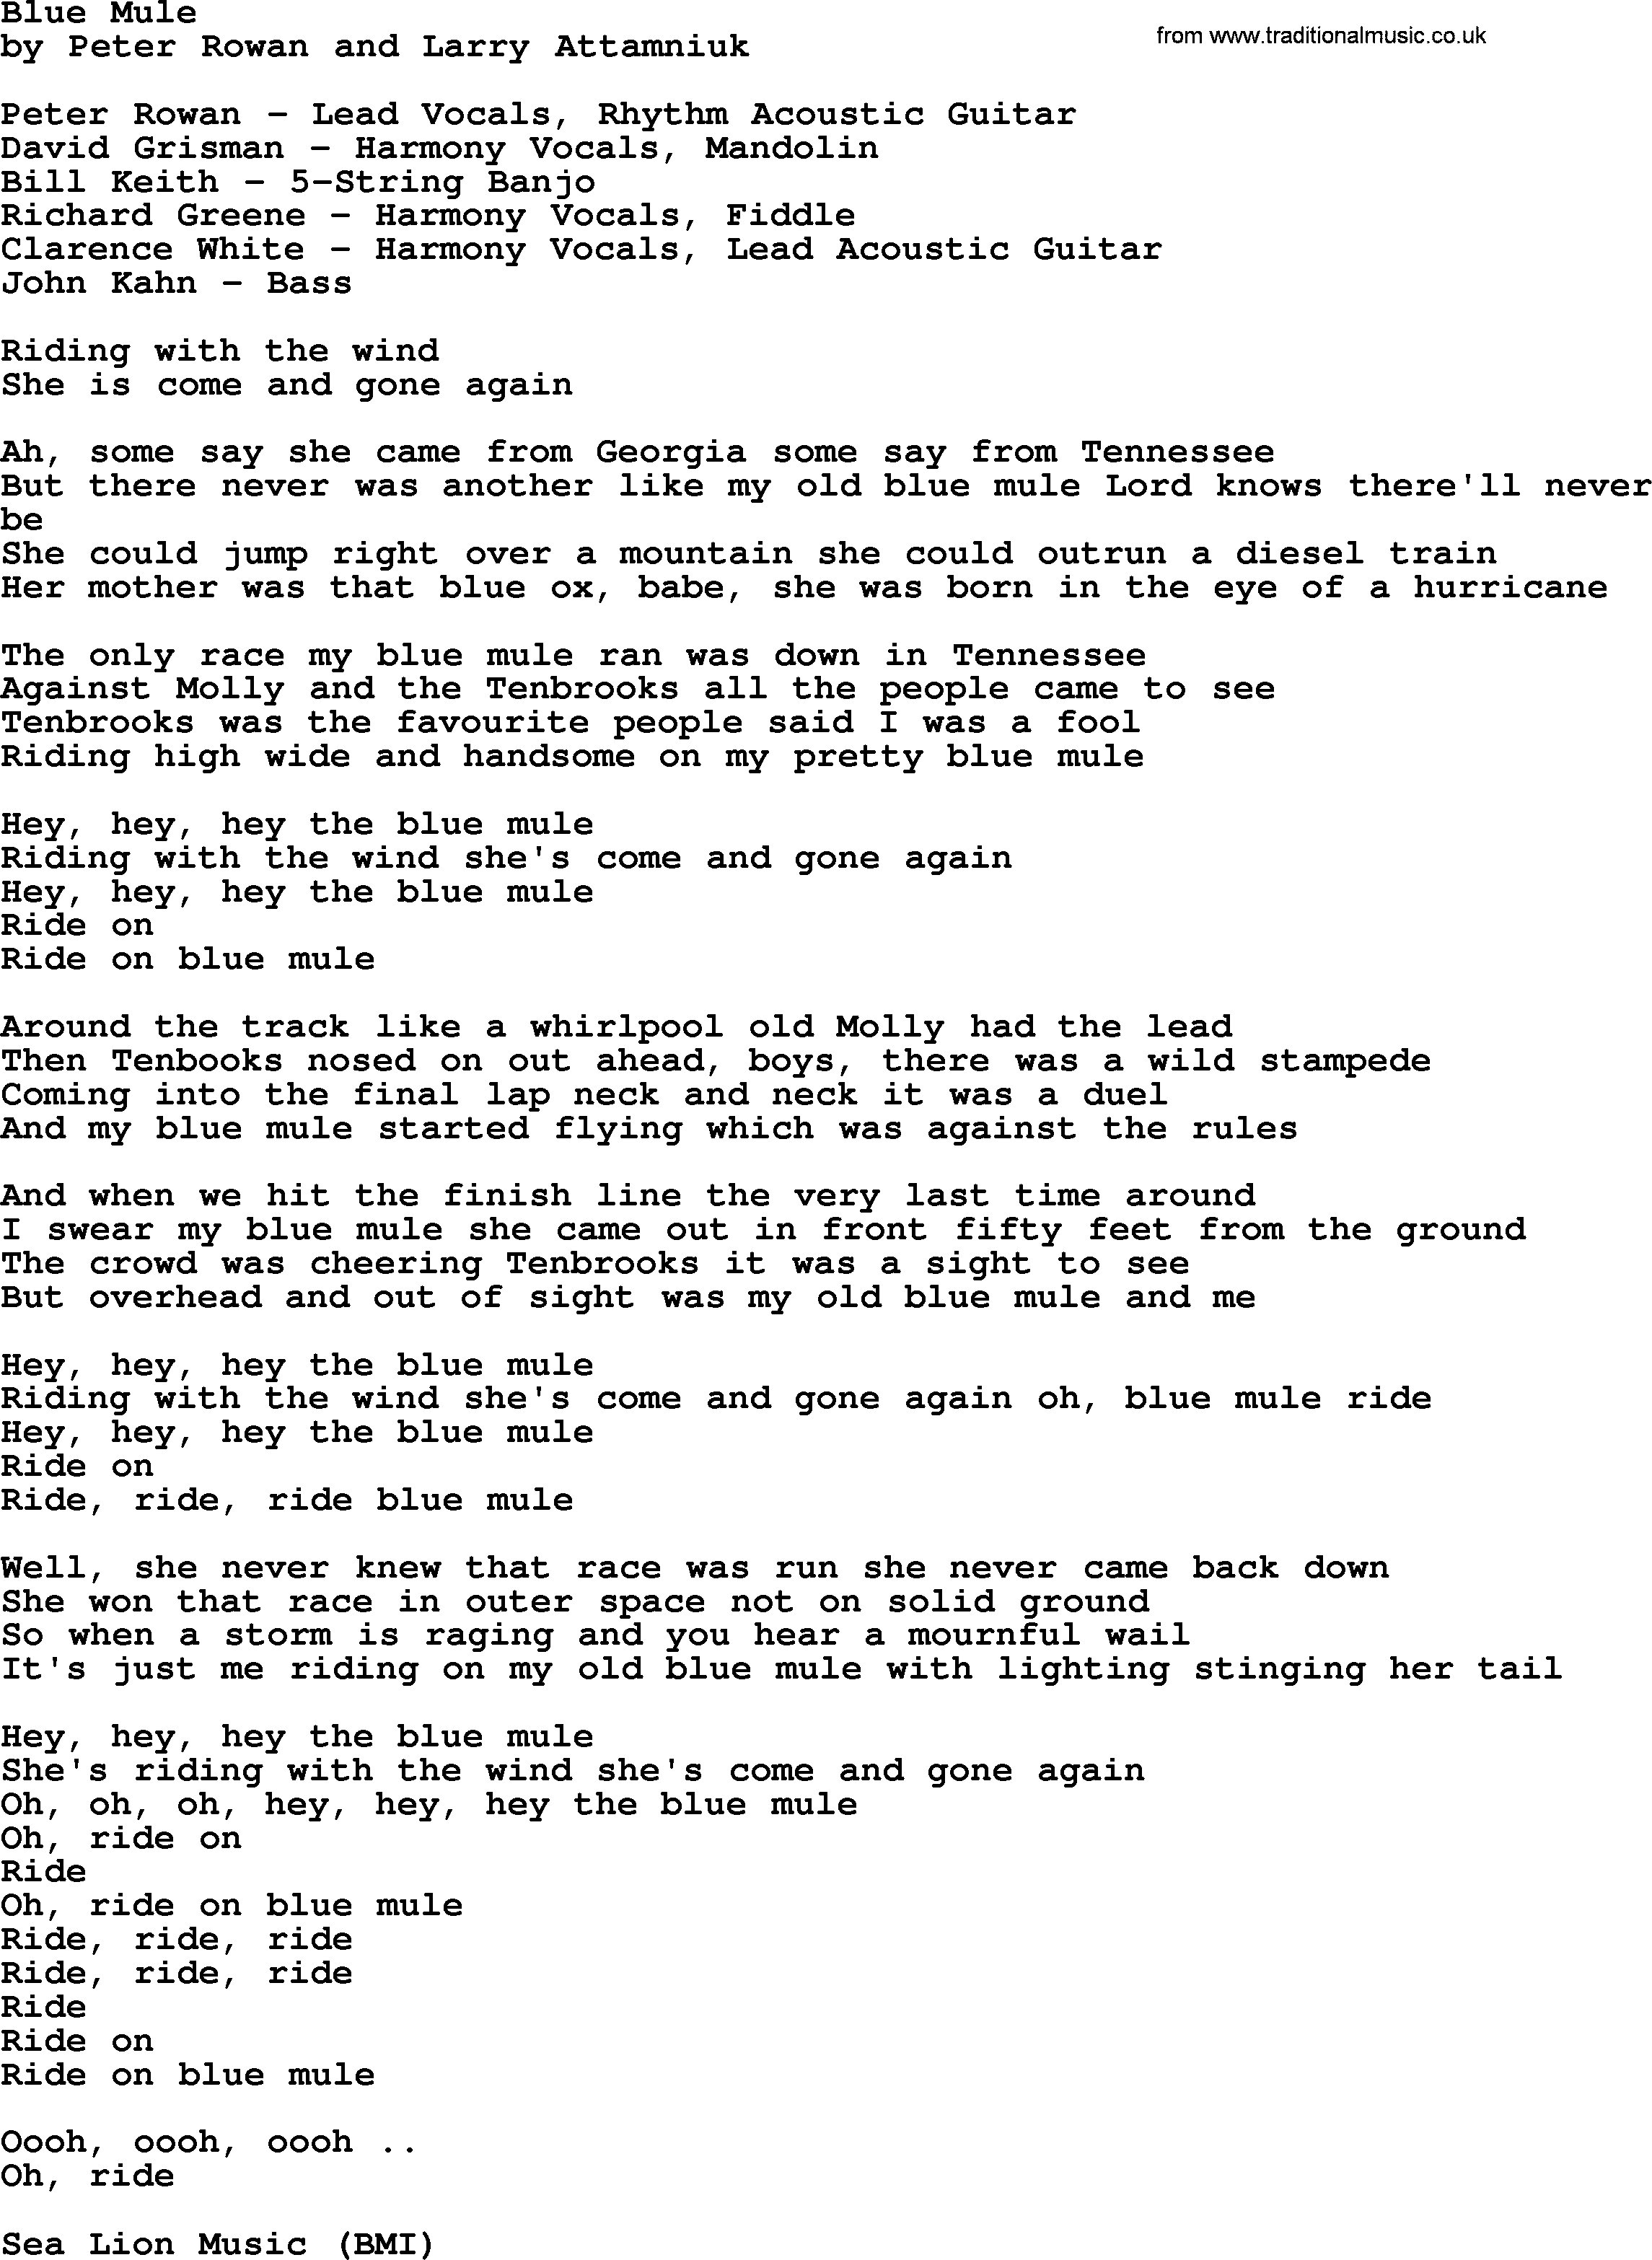 The Byrds song Blue Mule, lyrics